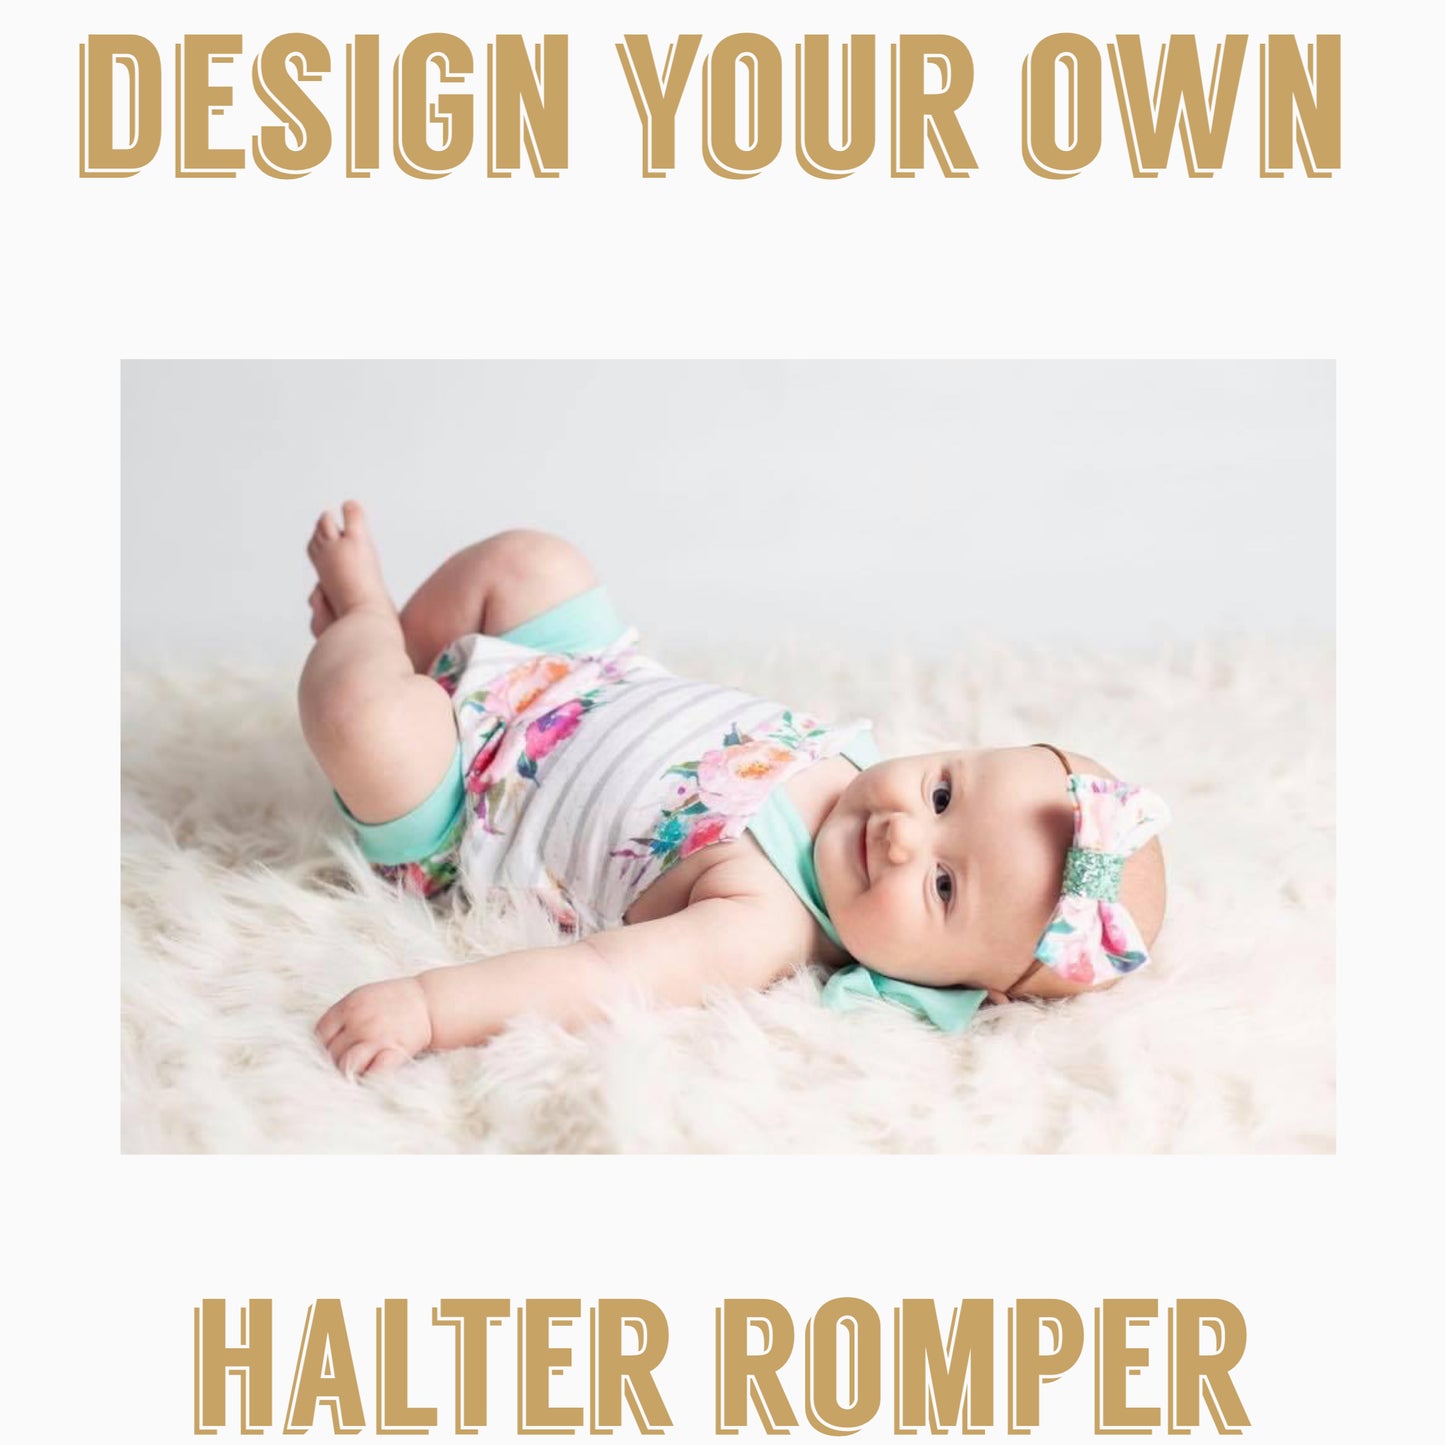 Design Your Own| Halter Romper